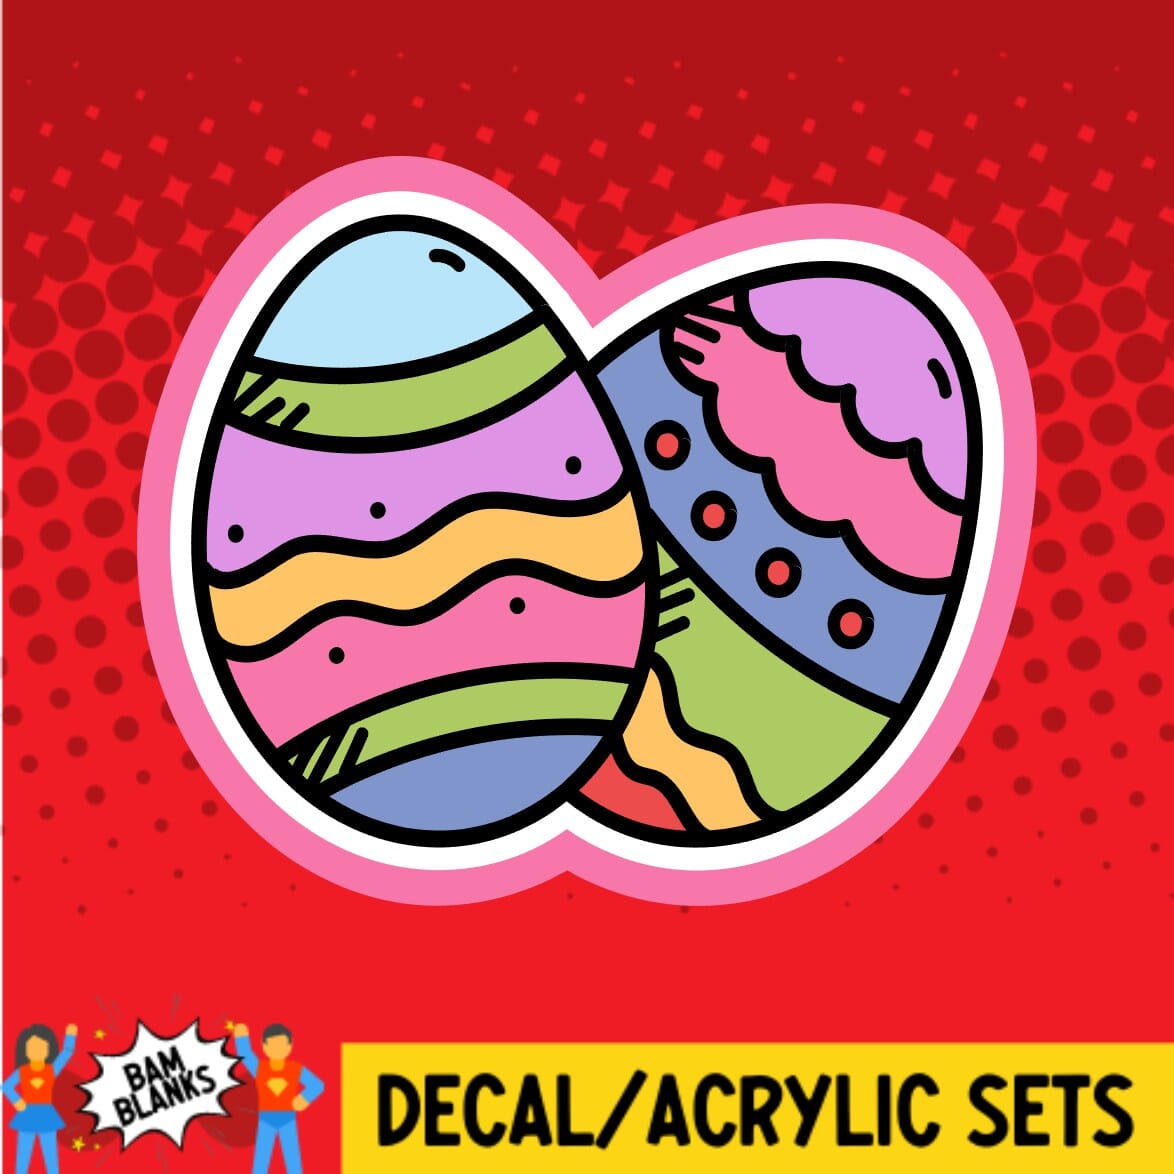 Easter Eggs - DECAL AND ACRYLIC SHAPE #DA01987